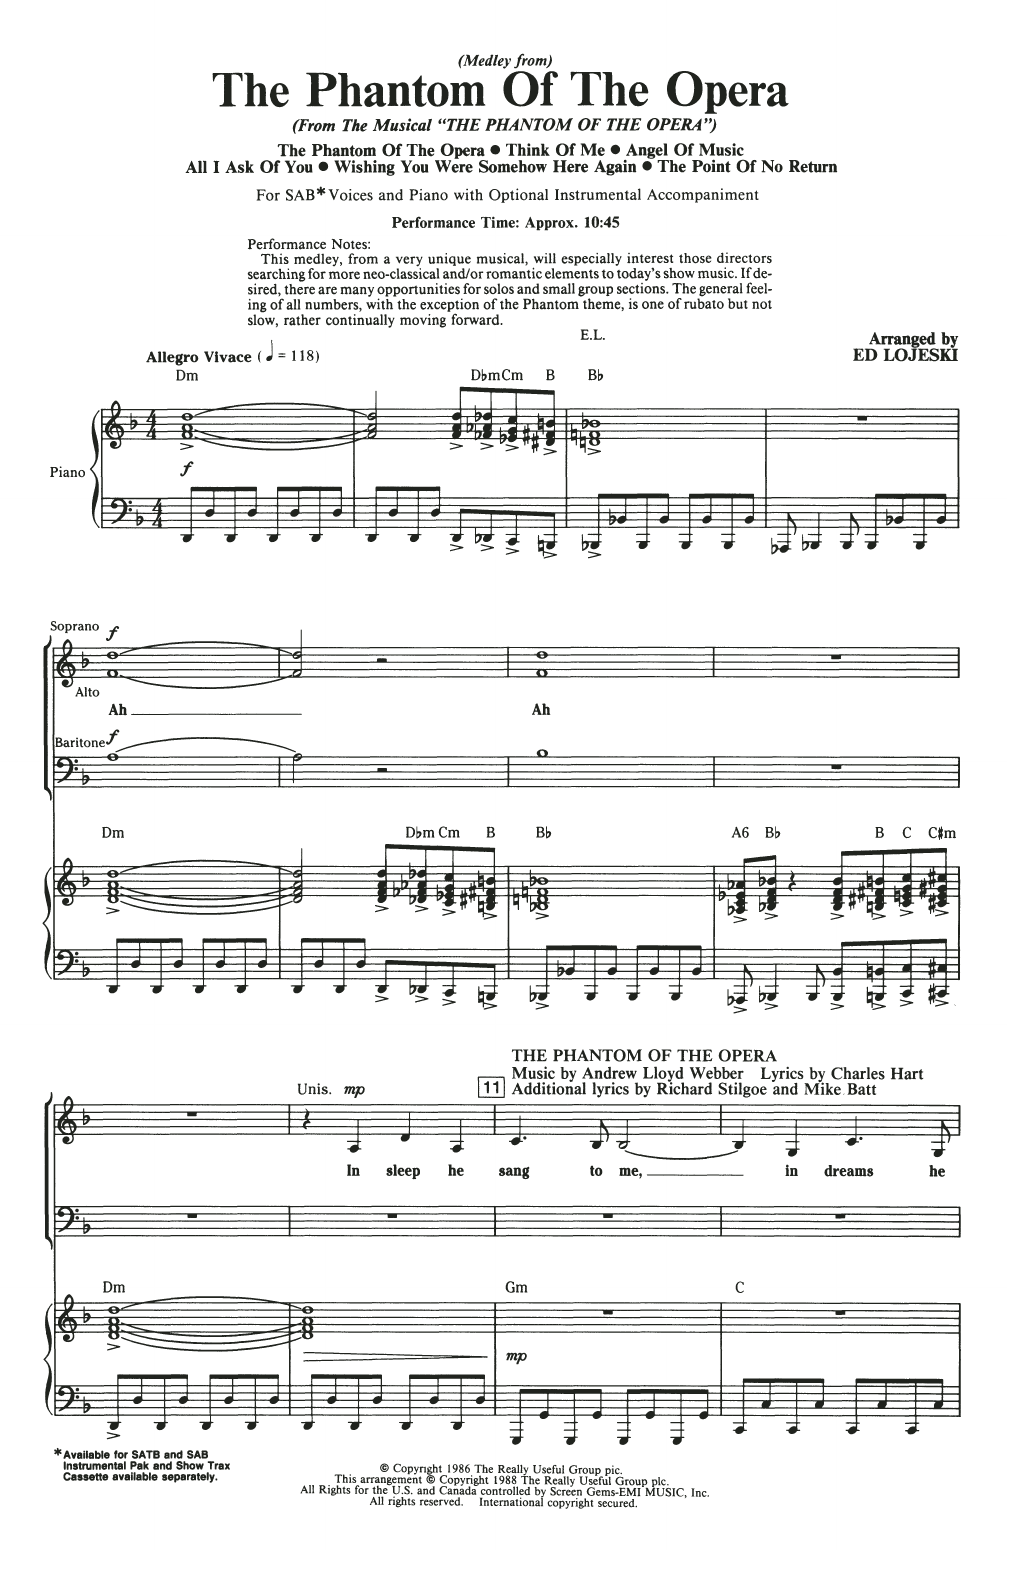 Andrew Lloyd Webber The Phantom Of The Opera (Medley) (arr. Ed Lojeski) Sheet Music Notes & Chords for SATB Choir - Download or Print PDF